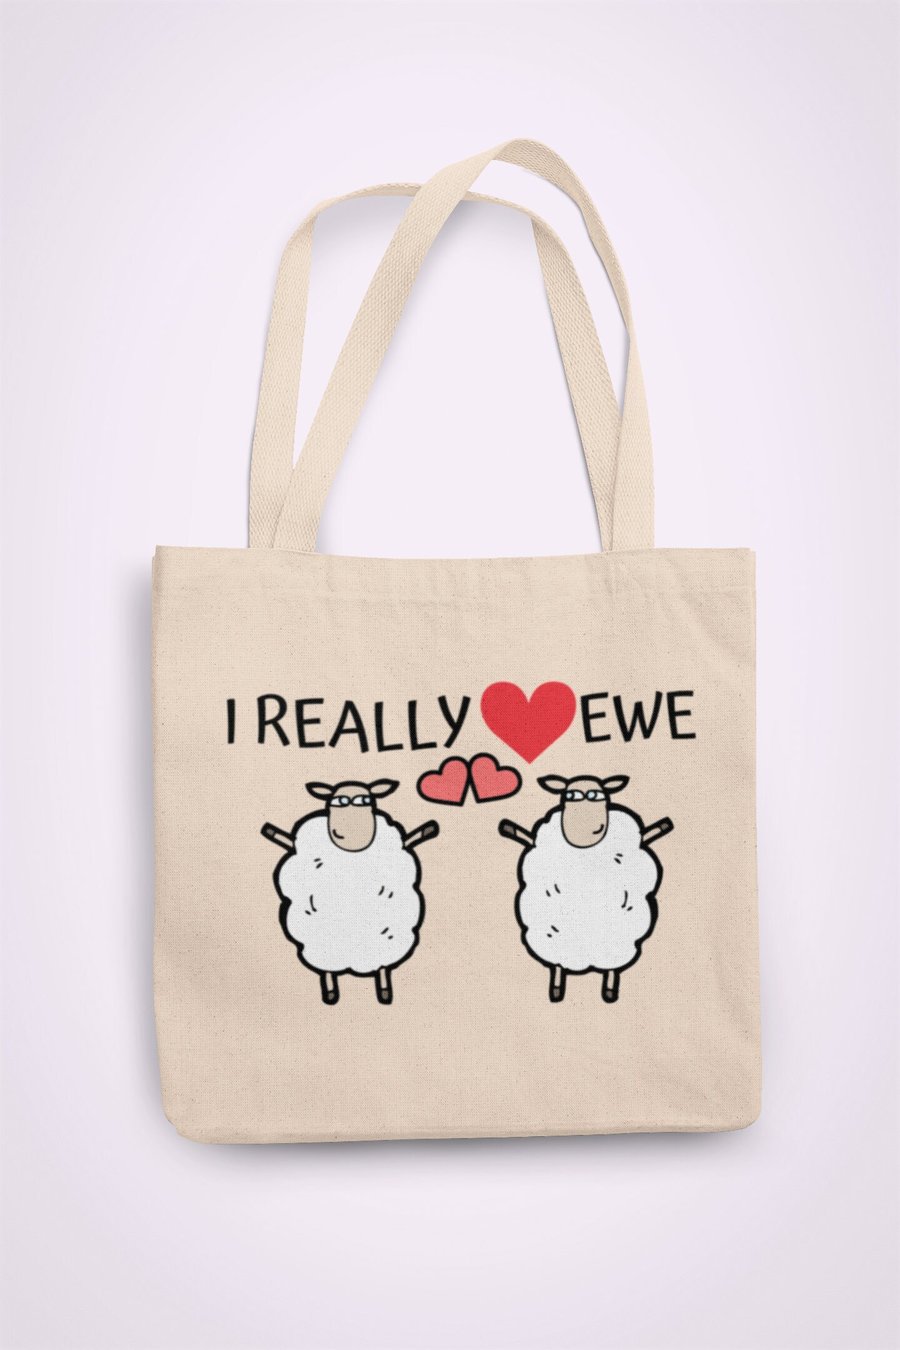 I Really Love Ewe Tote Bag shopping bag - valentines gift present - Wool theme